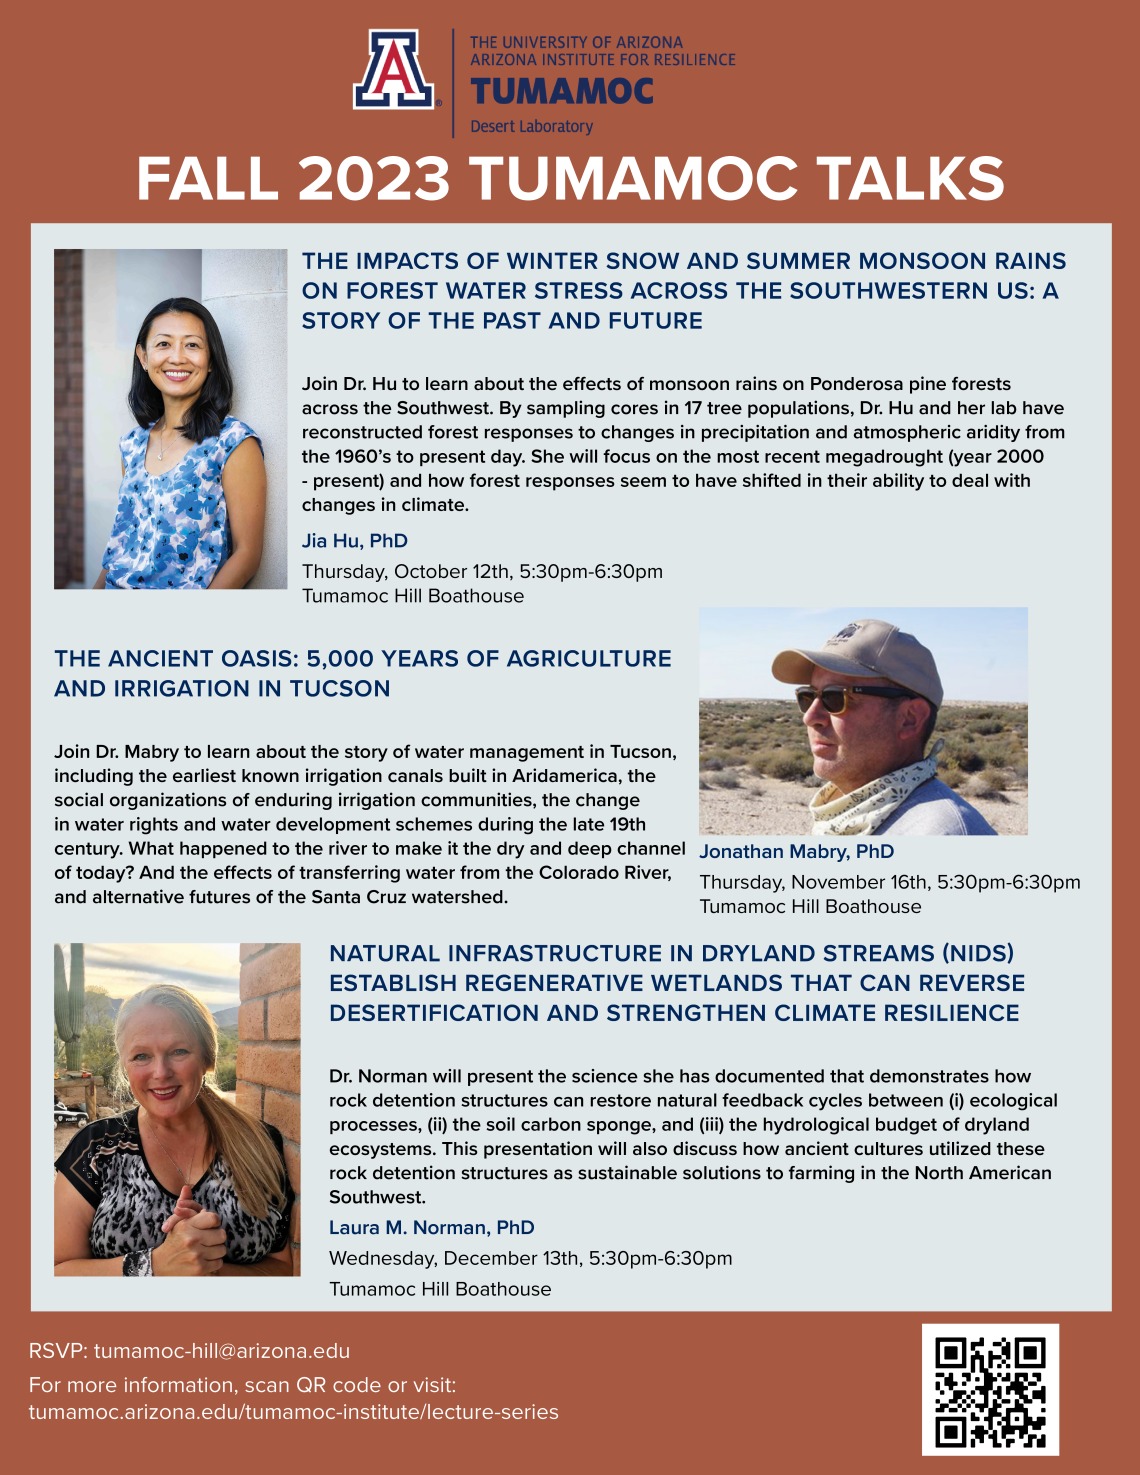 Flyer of the Fall 2023 Tumamoc Talks schedule